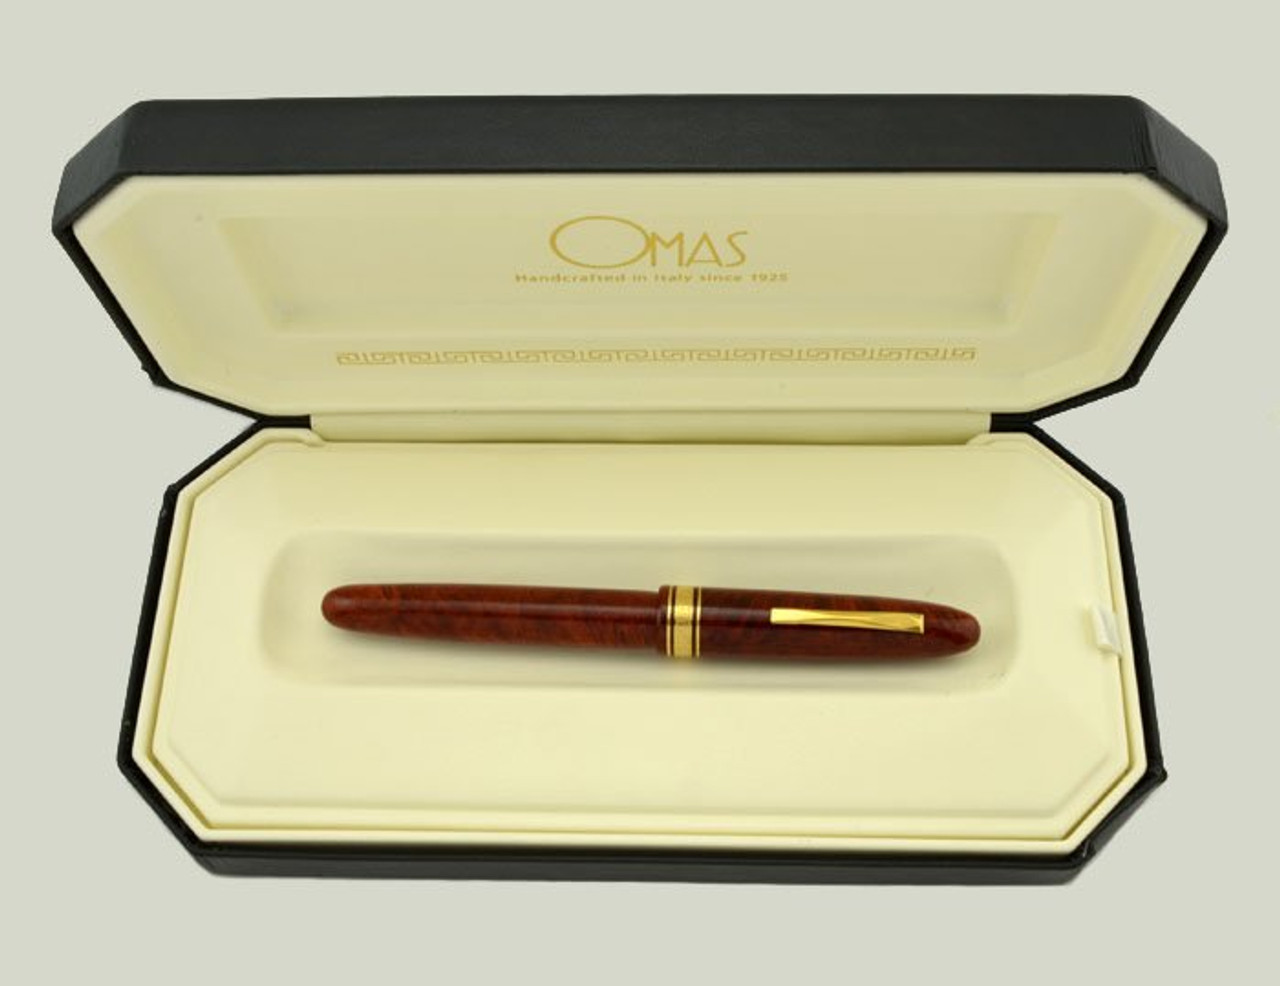 Omas AM-87 Fountain Pen - Oversized, Briarwood Red Tabac, Medium 18k Nib (Excellent in Box, New Nib)